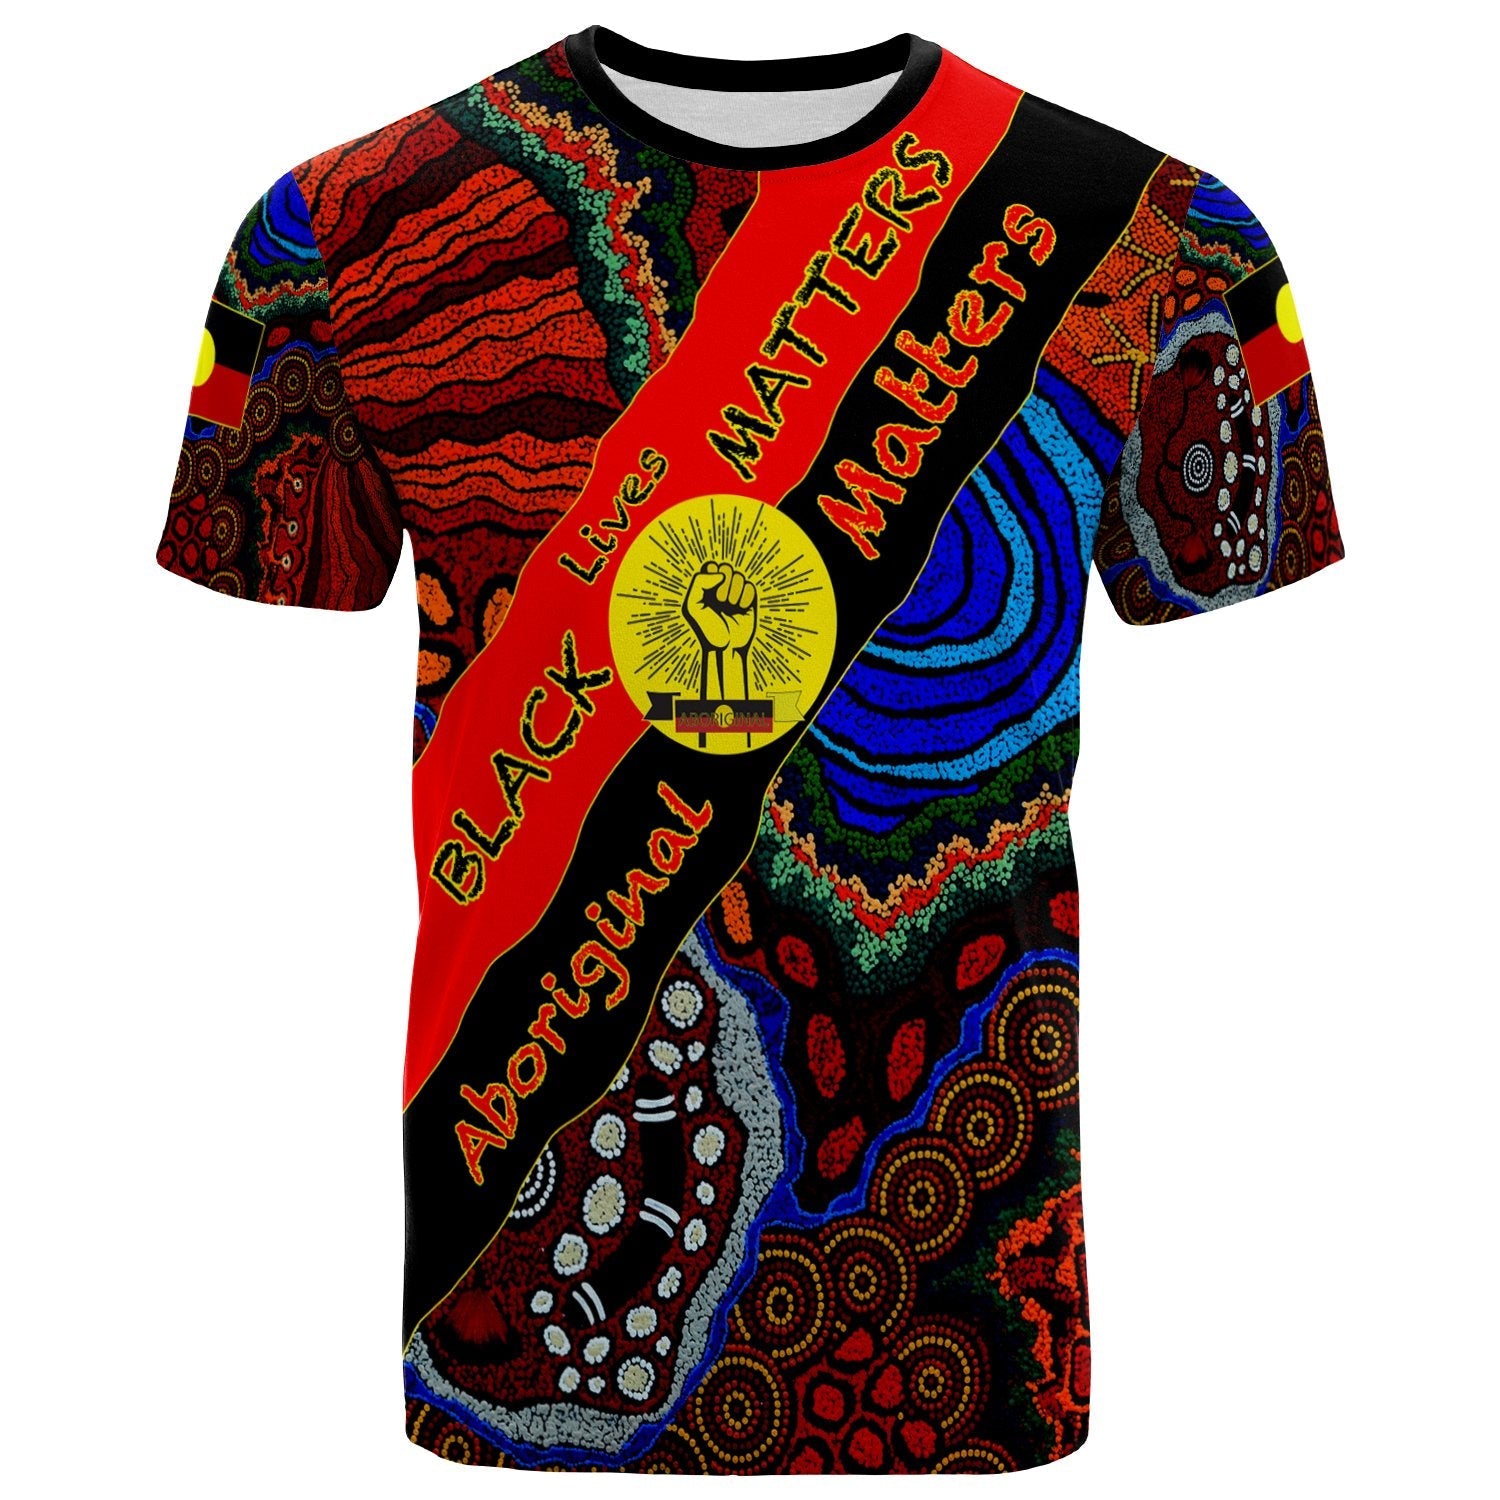 aboriginal-t-shirt-breakout-black-lives-matter-and-patterns